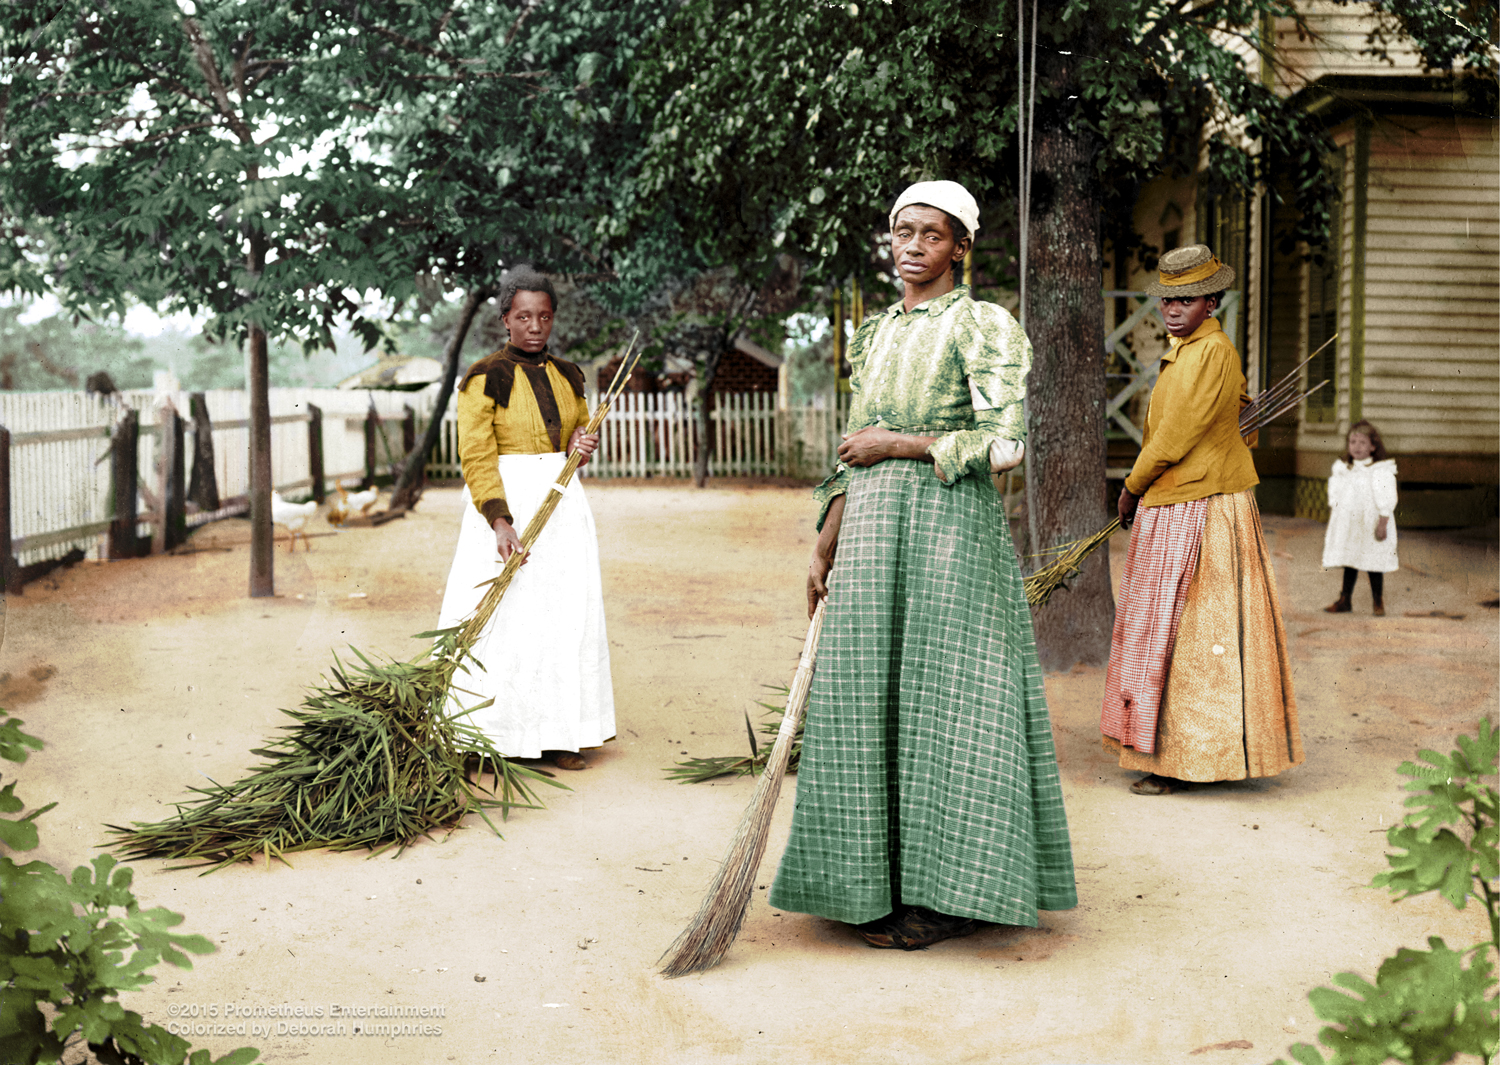 Women Sweeping, SC 1899 © 2015 Prometheus Entertainment